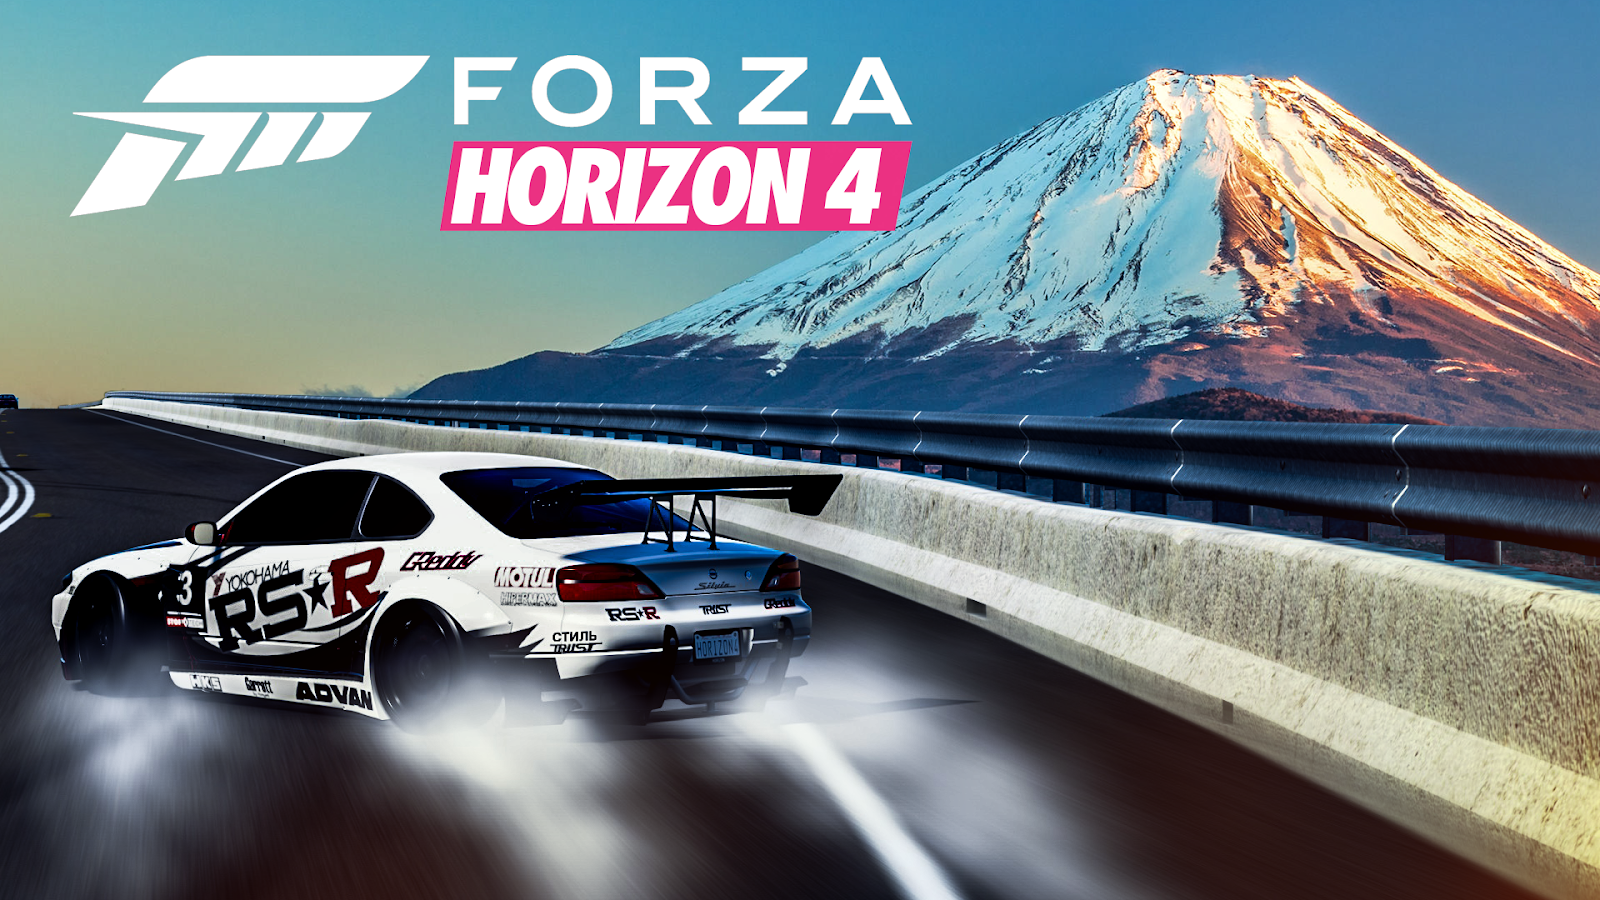 Forza Horizon 2 [PC] Full Version Download - FlareFiles.com